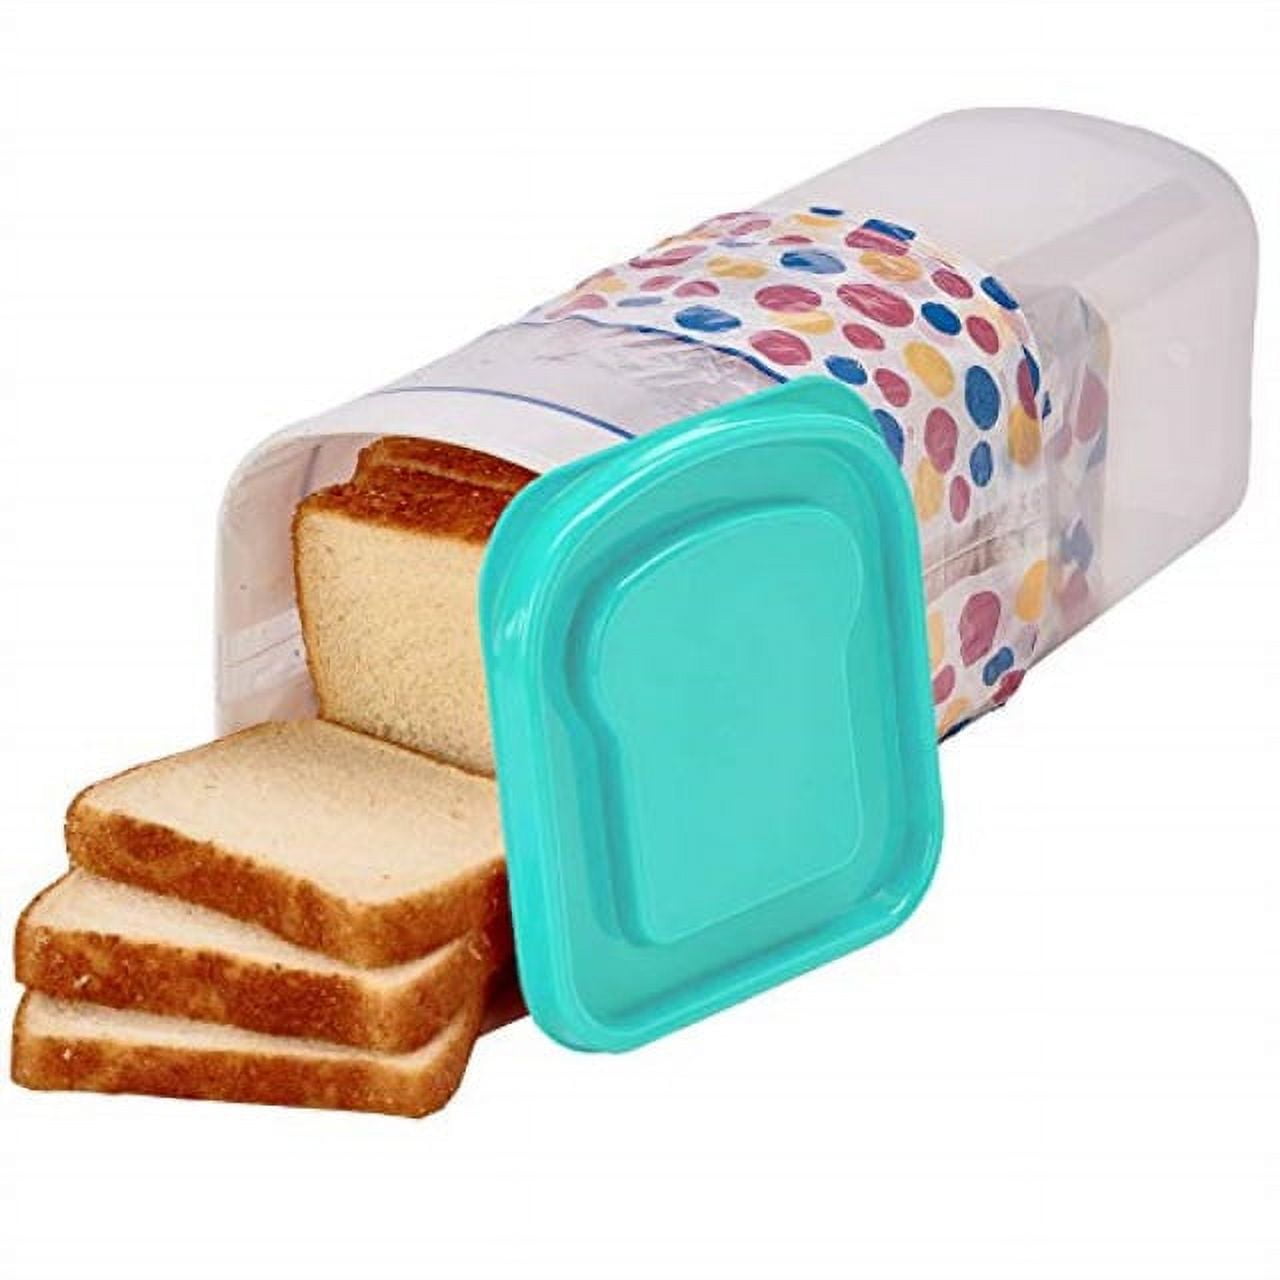  Buddeez Bread Buddy Bread Box – Fresh Bread Storage Container,  Plastic Sandwich Bread Dispenser, Red Lid, Pack of 1 : Home & Kitchen